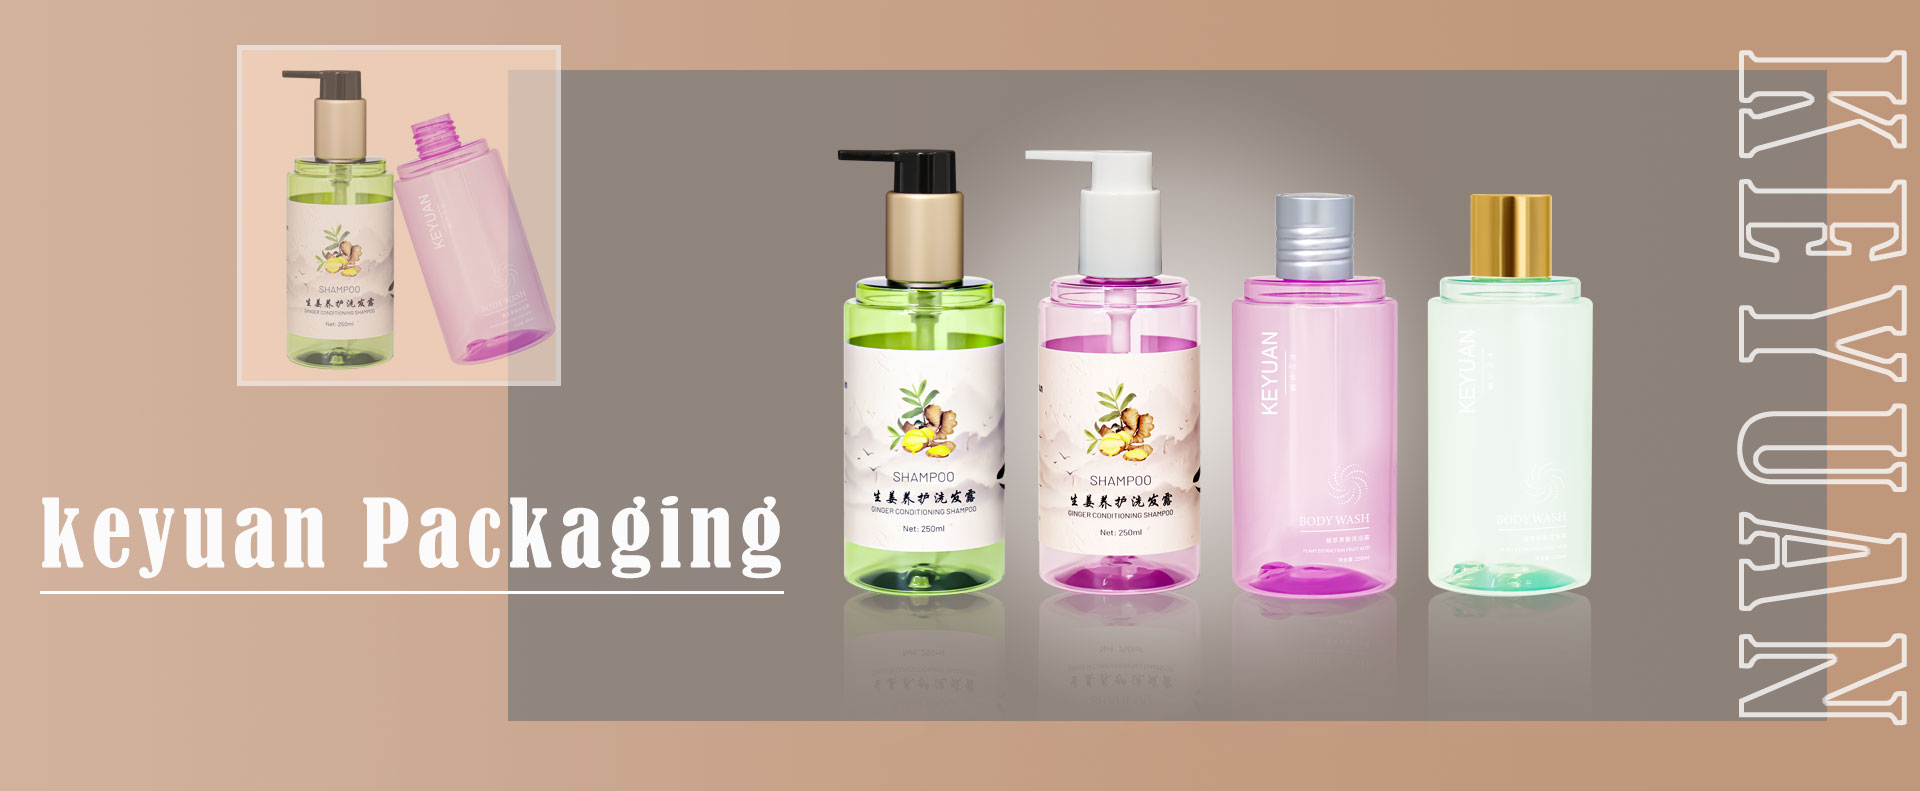 KY229-1 250ml Transparent Round Cosmetic Shampoo Bottle Shower Gel Bottle